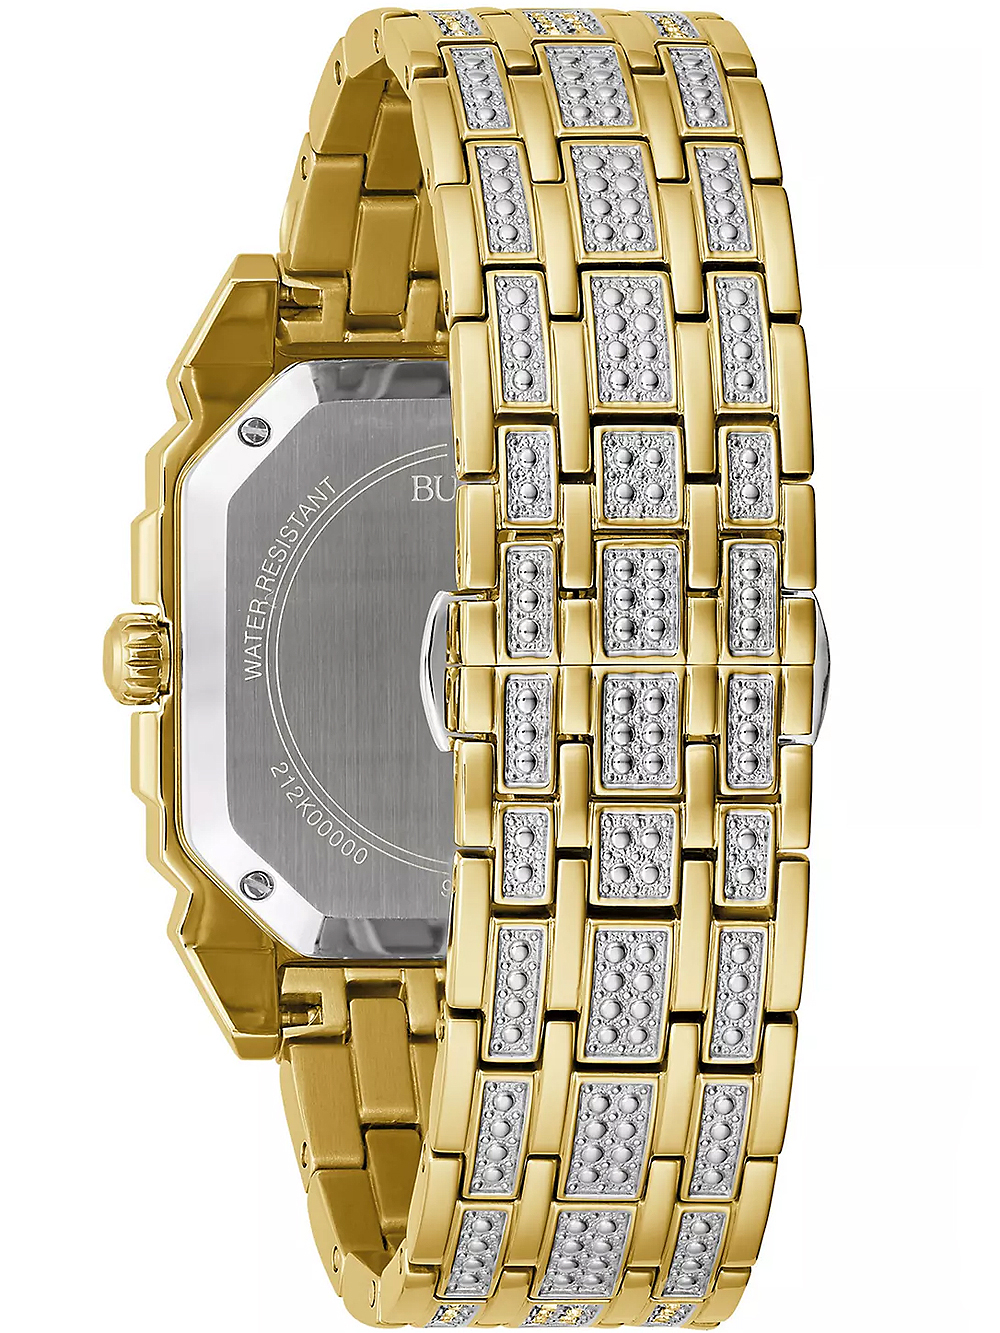 Zegarek męski Bulova Crystal Octava 98A295 złoty